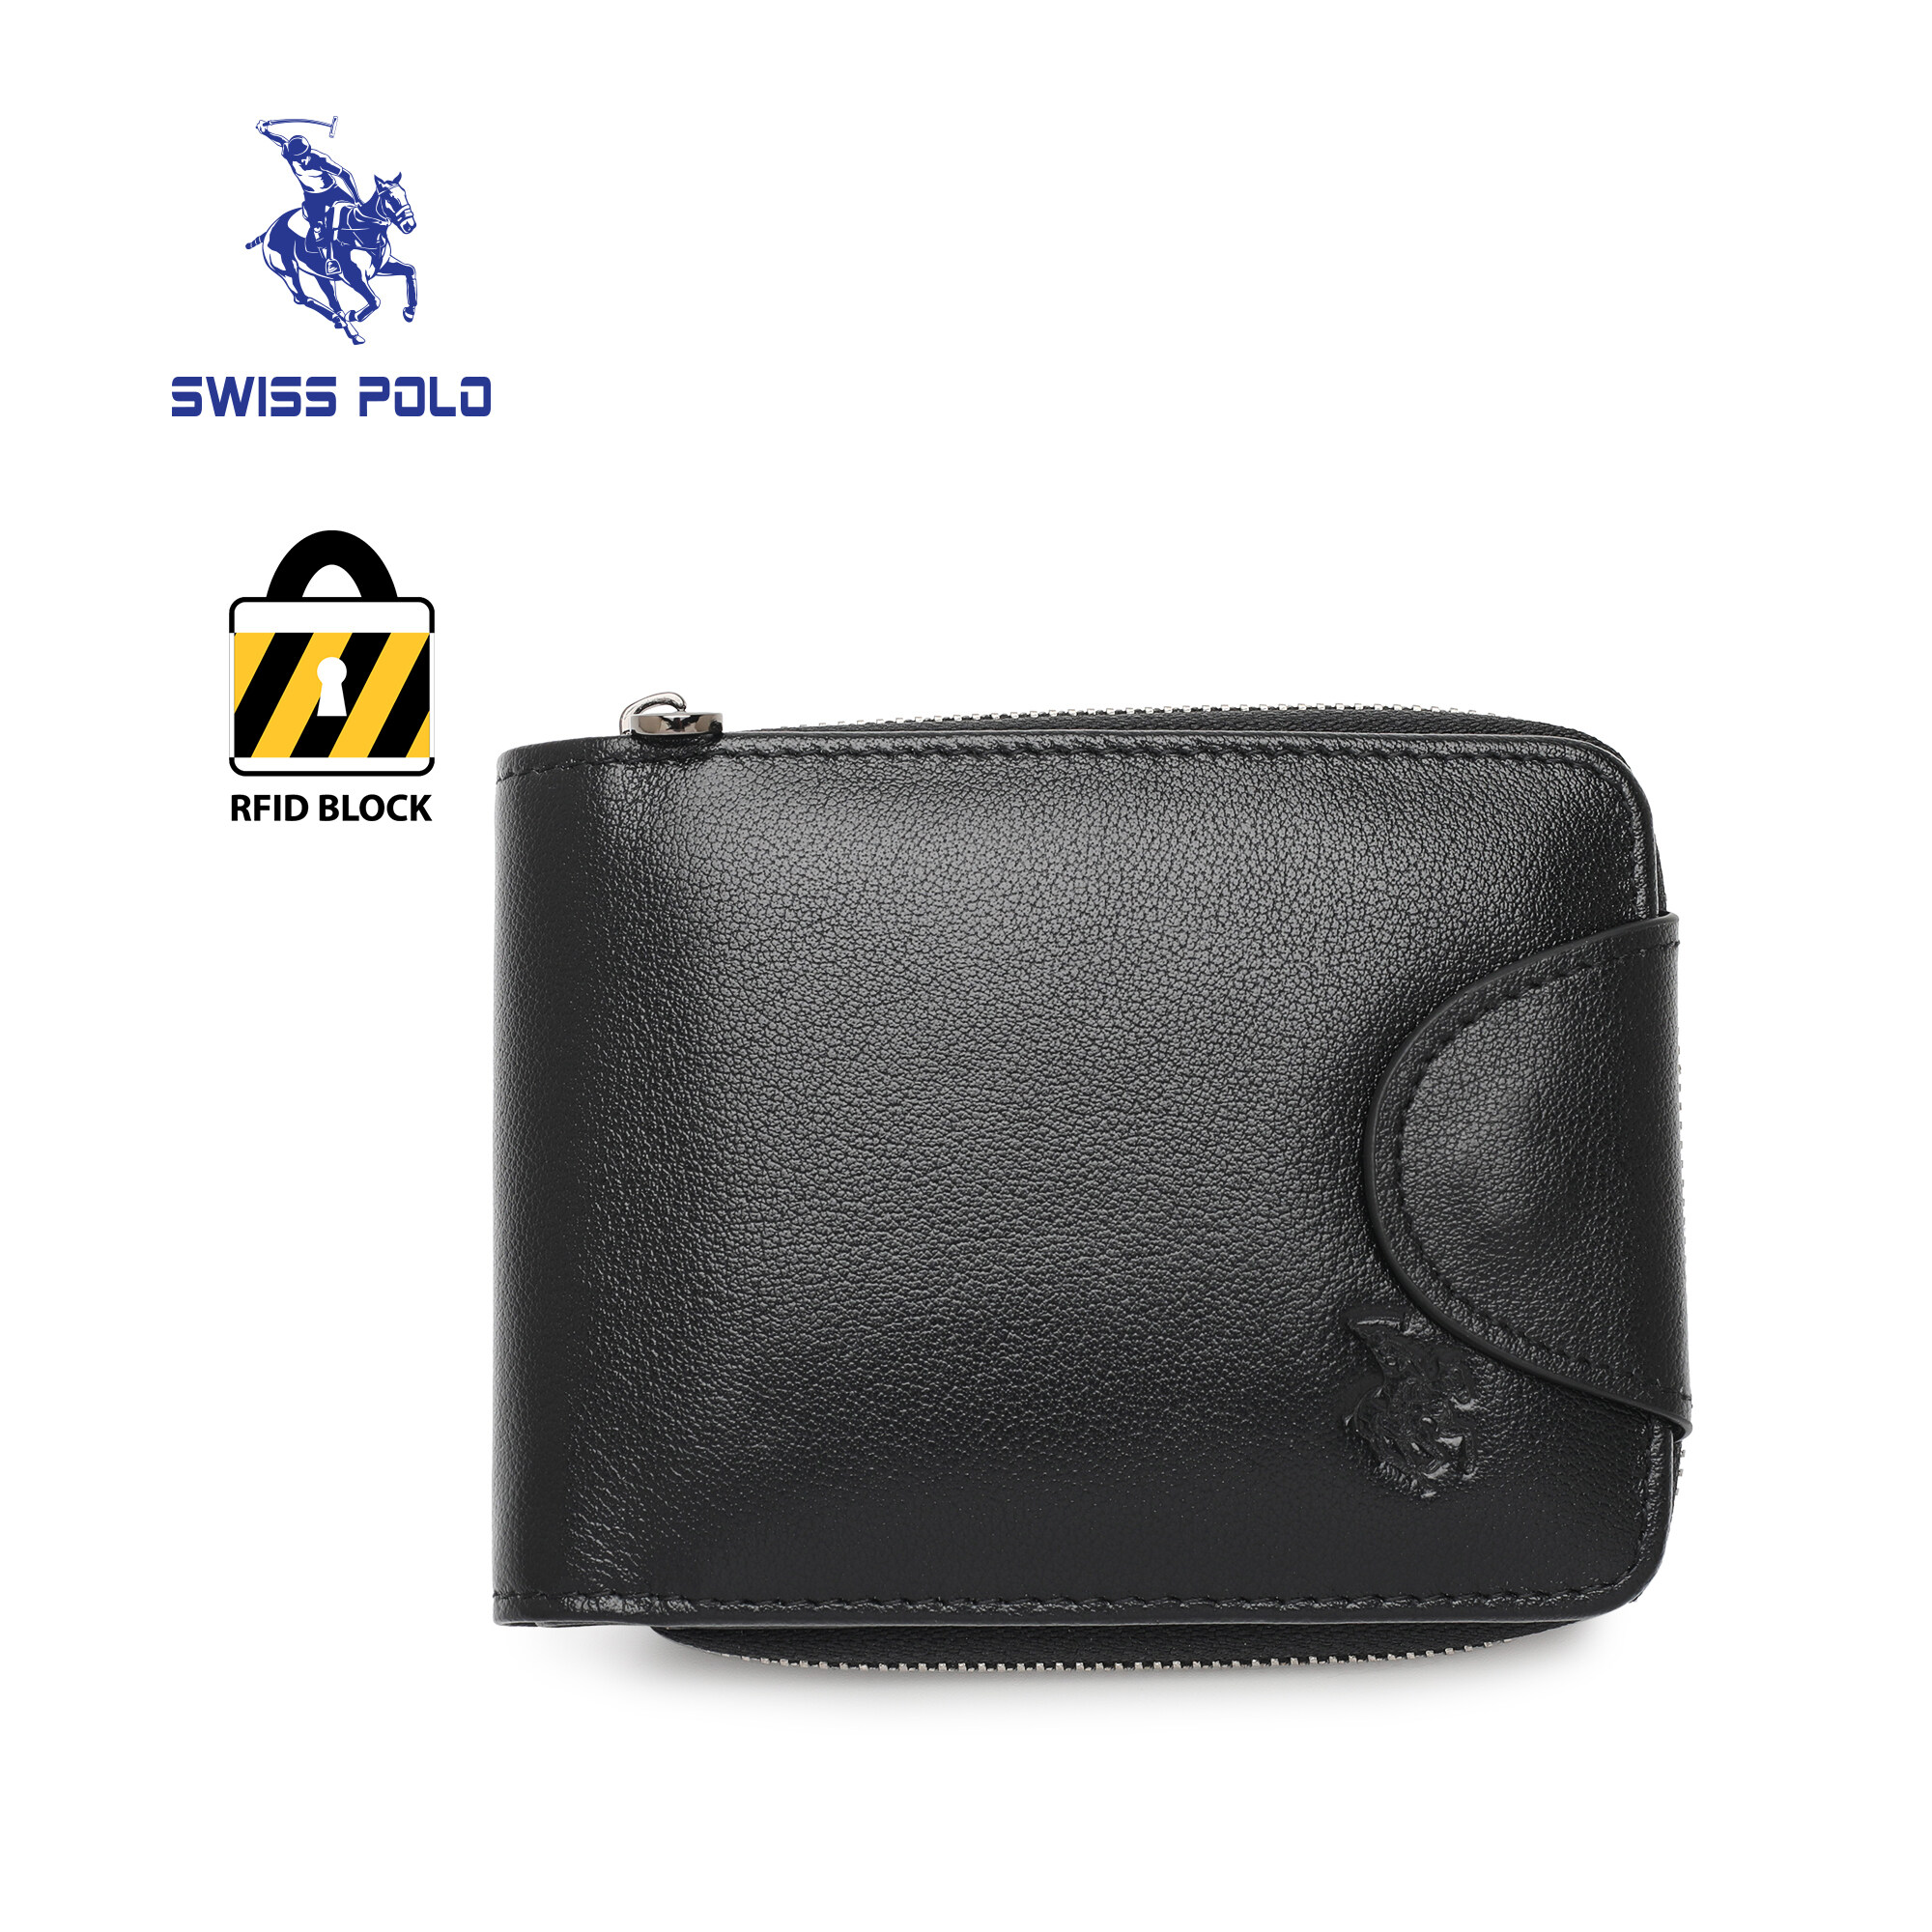 SWISS POLO Genuine Leather RFID Short Wallet SW 167-7 BLACK